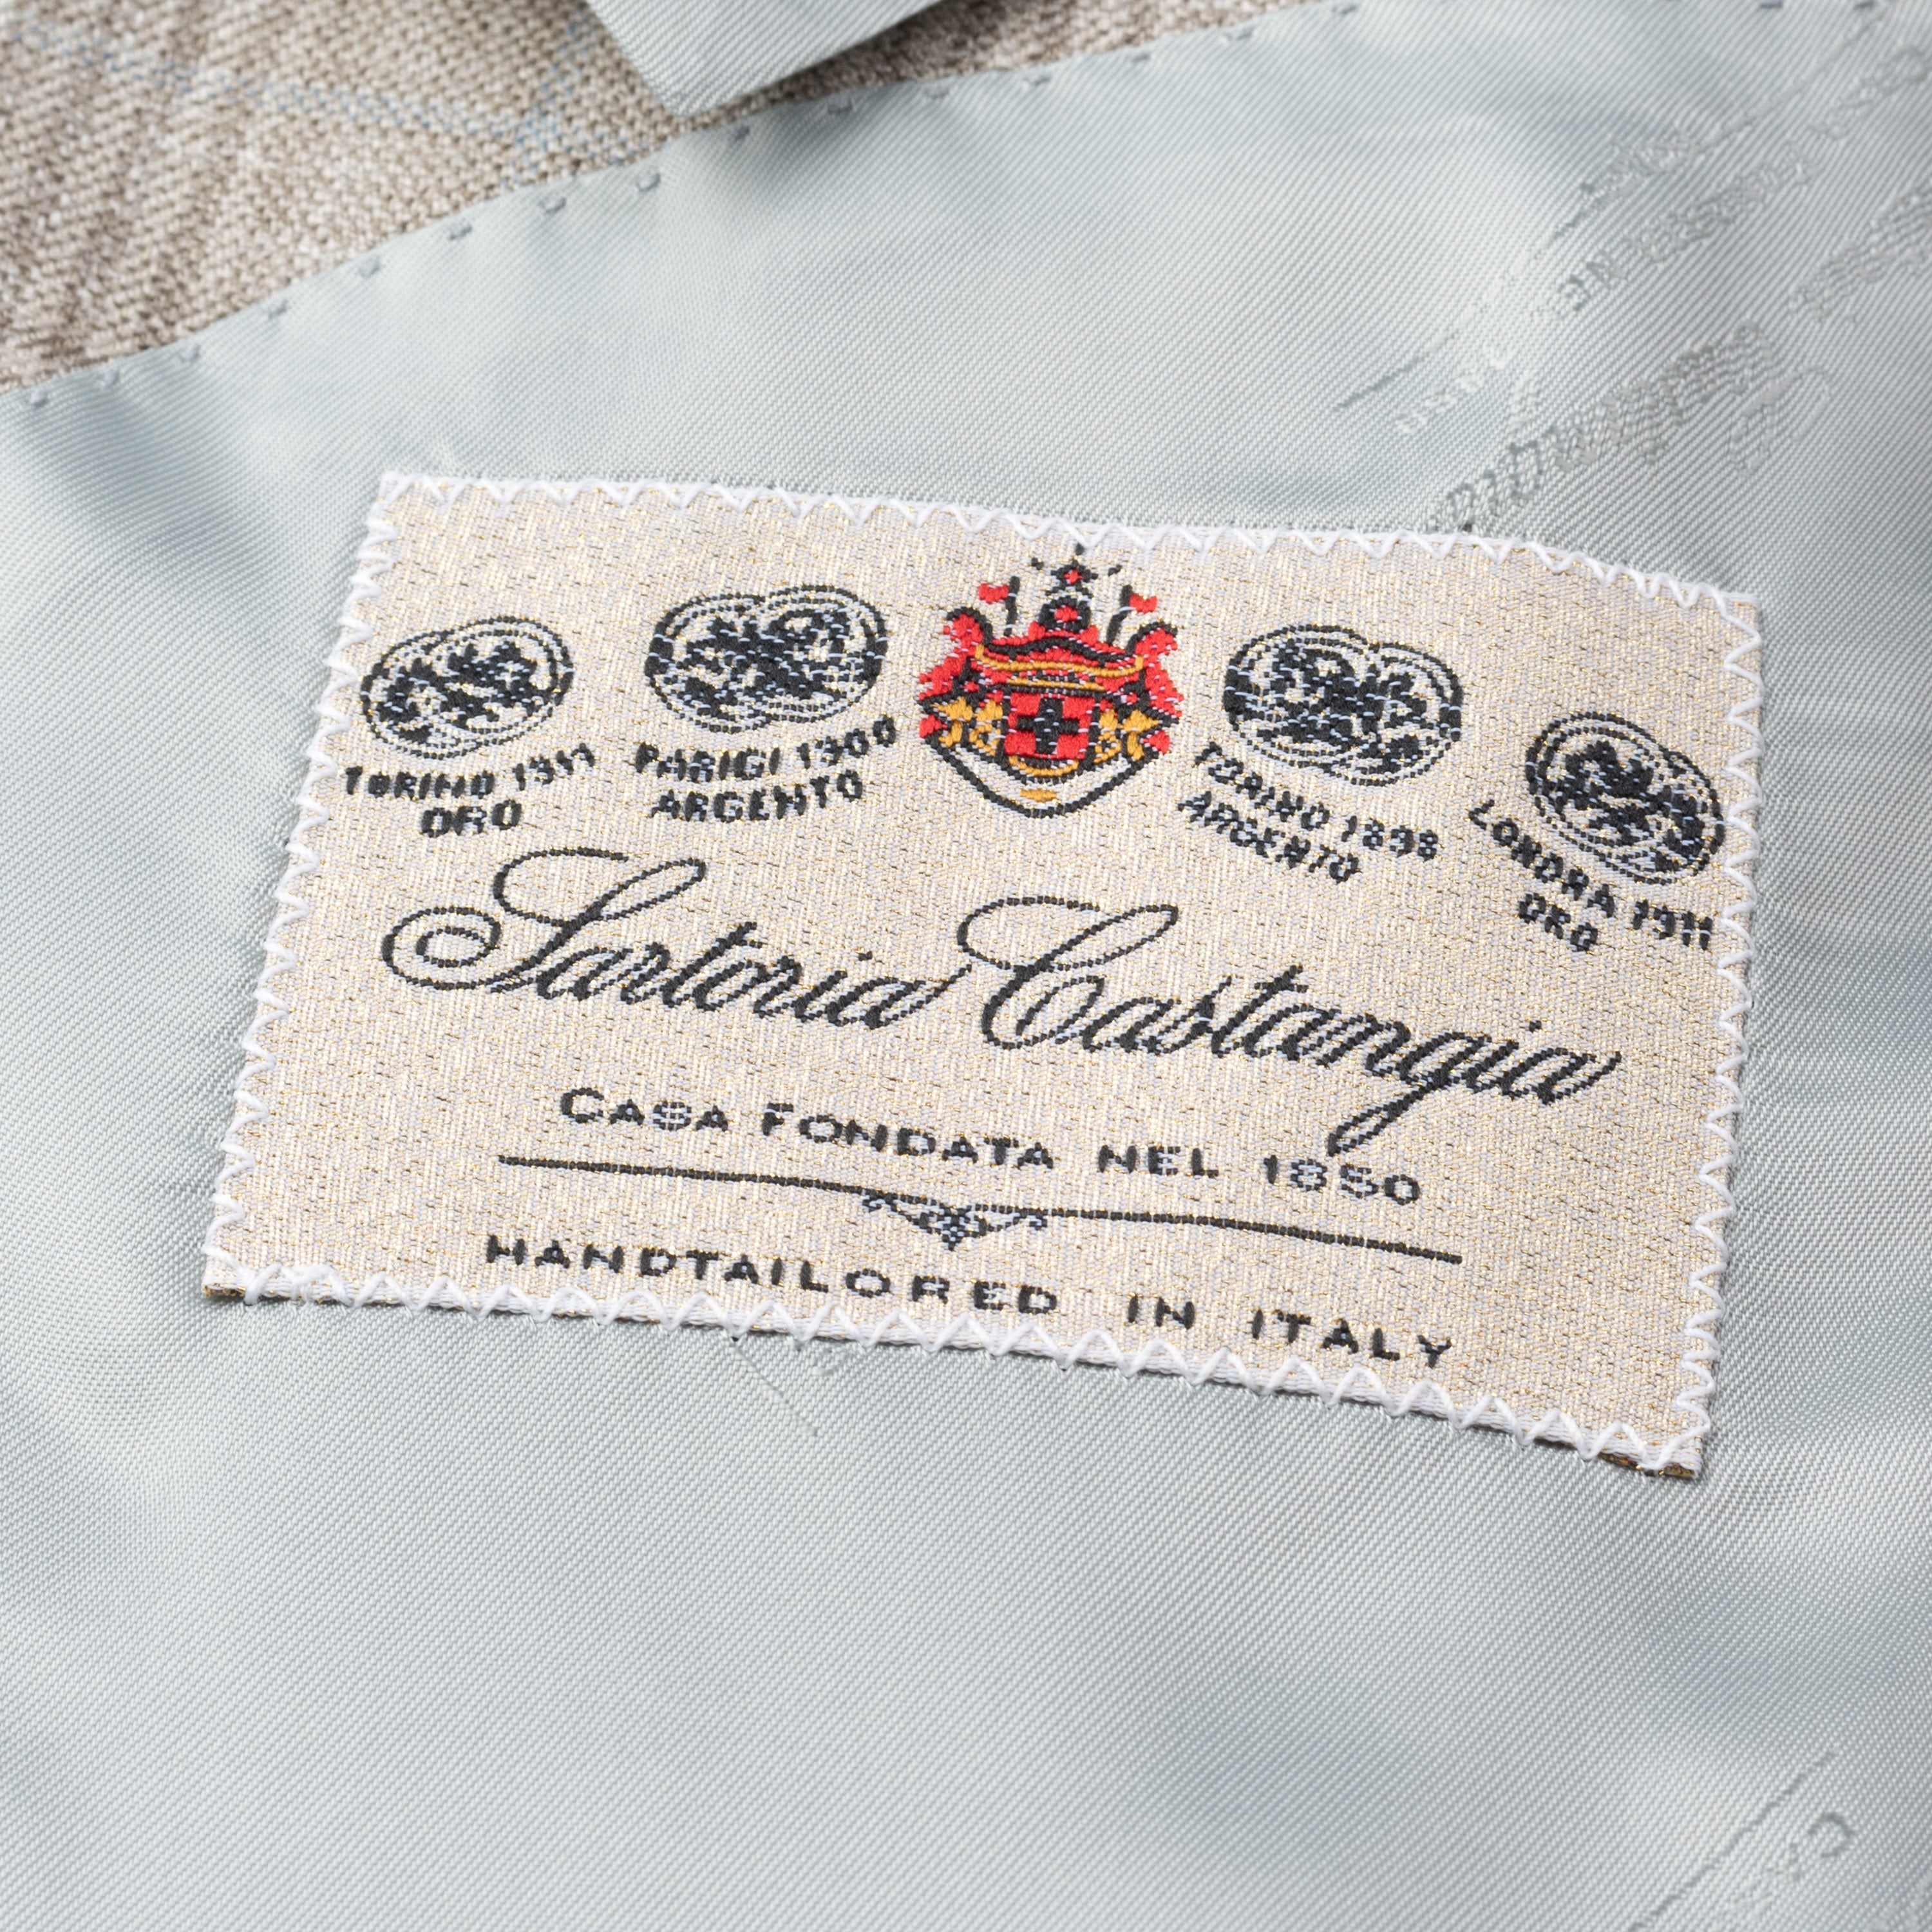 SARTORIA CASTANGIA Gray Plaid Wool-Silk-Linen Sport Coat Jacket EU 54 NEW US 44 CASTANGIA